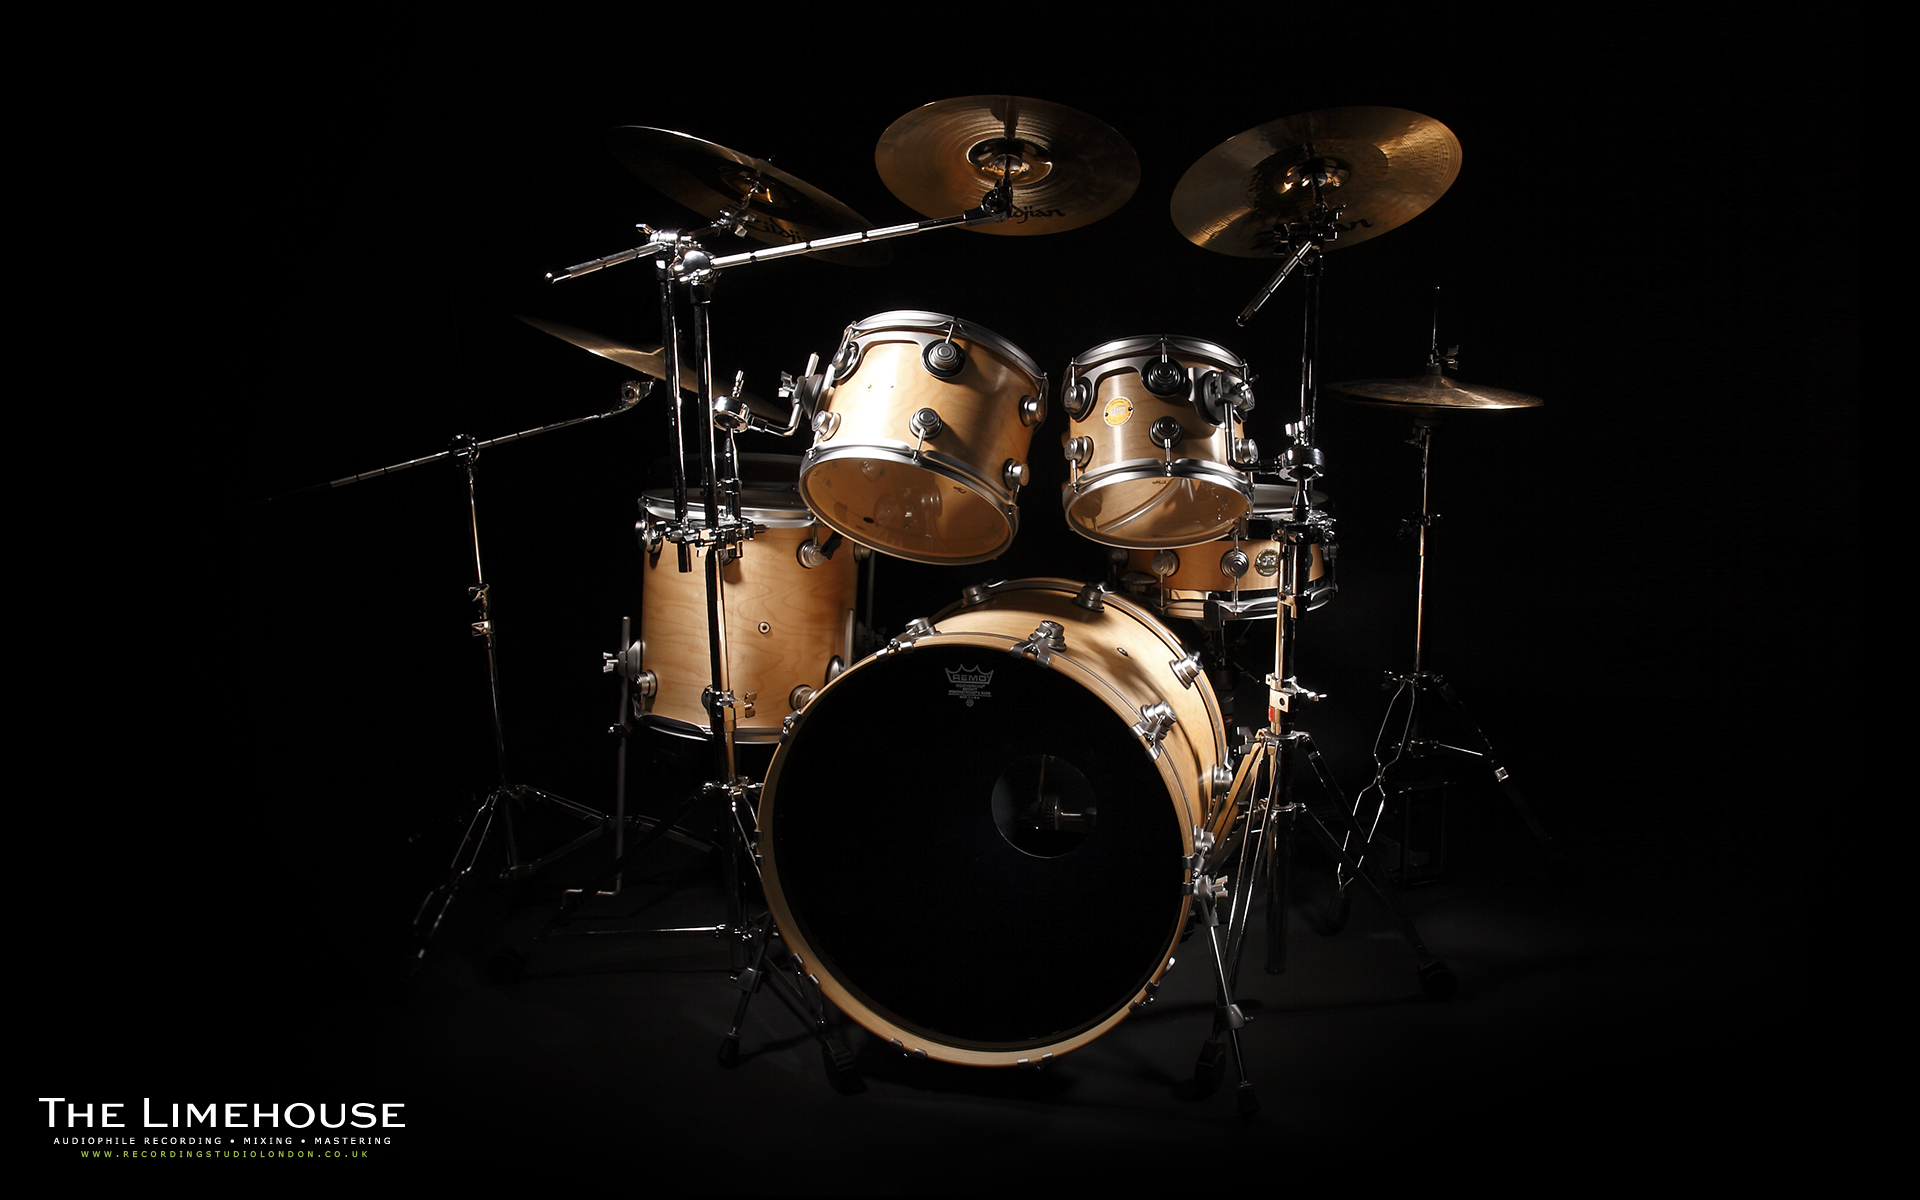 drums, drum set - desktop wallpaper